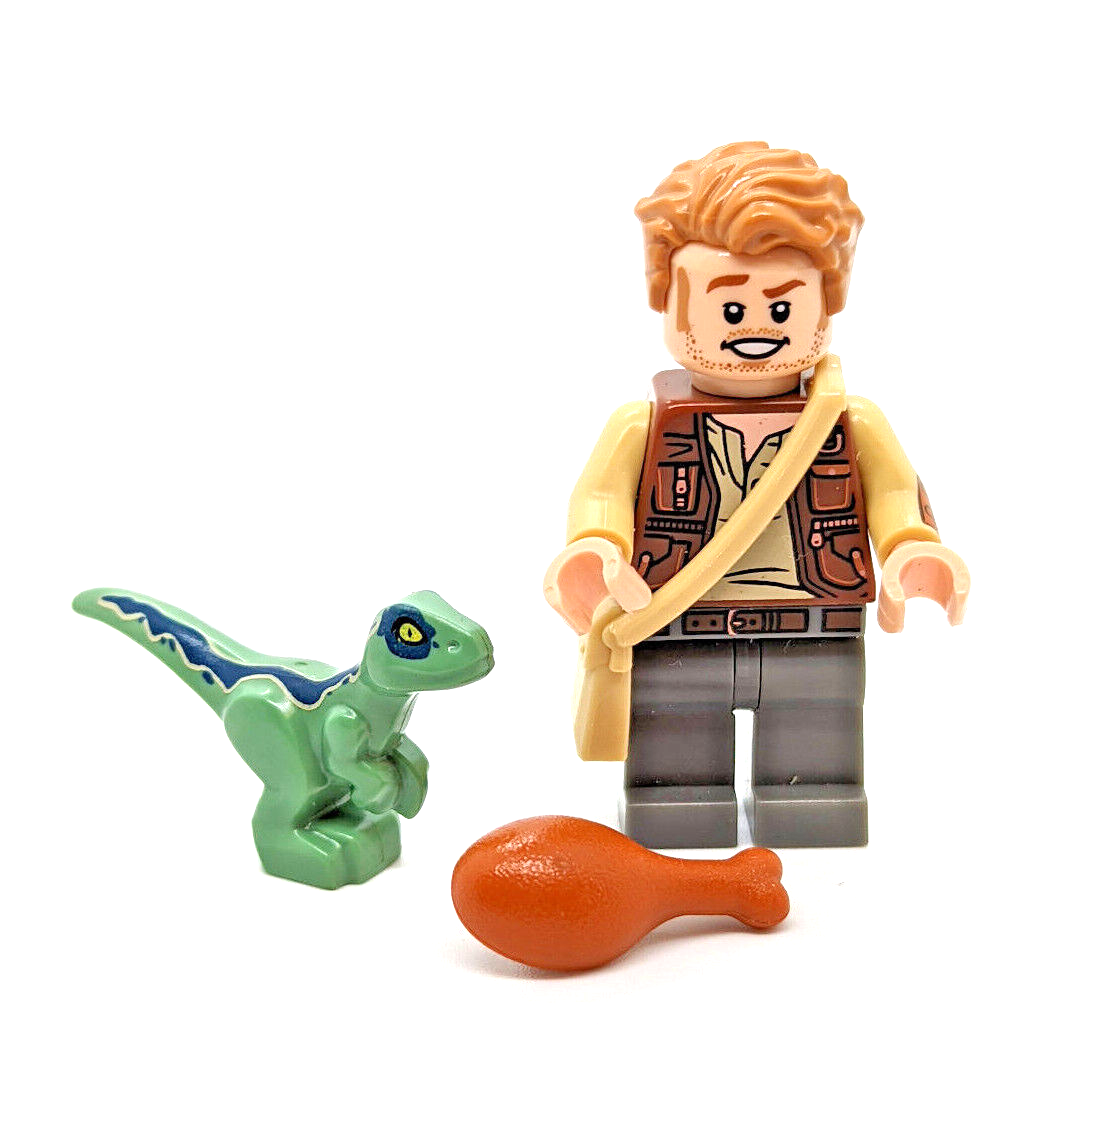 Lego Jurassic World Minifigure - Owen Grady w/ Pouch & Blue 5005255 Bricktober